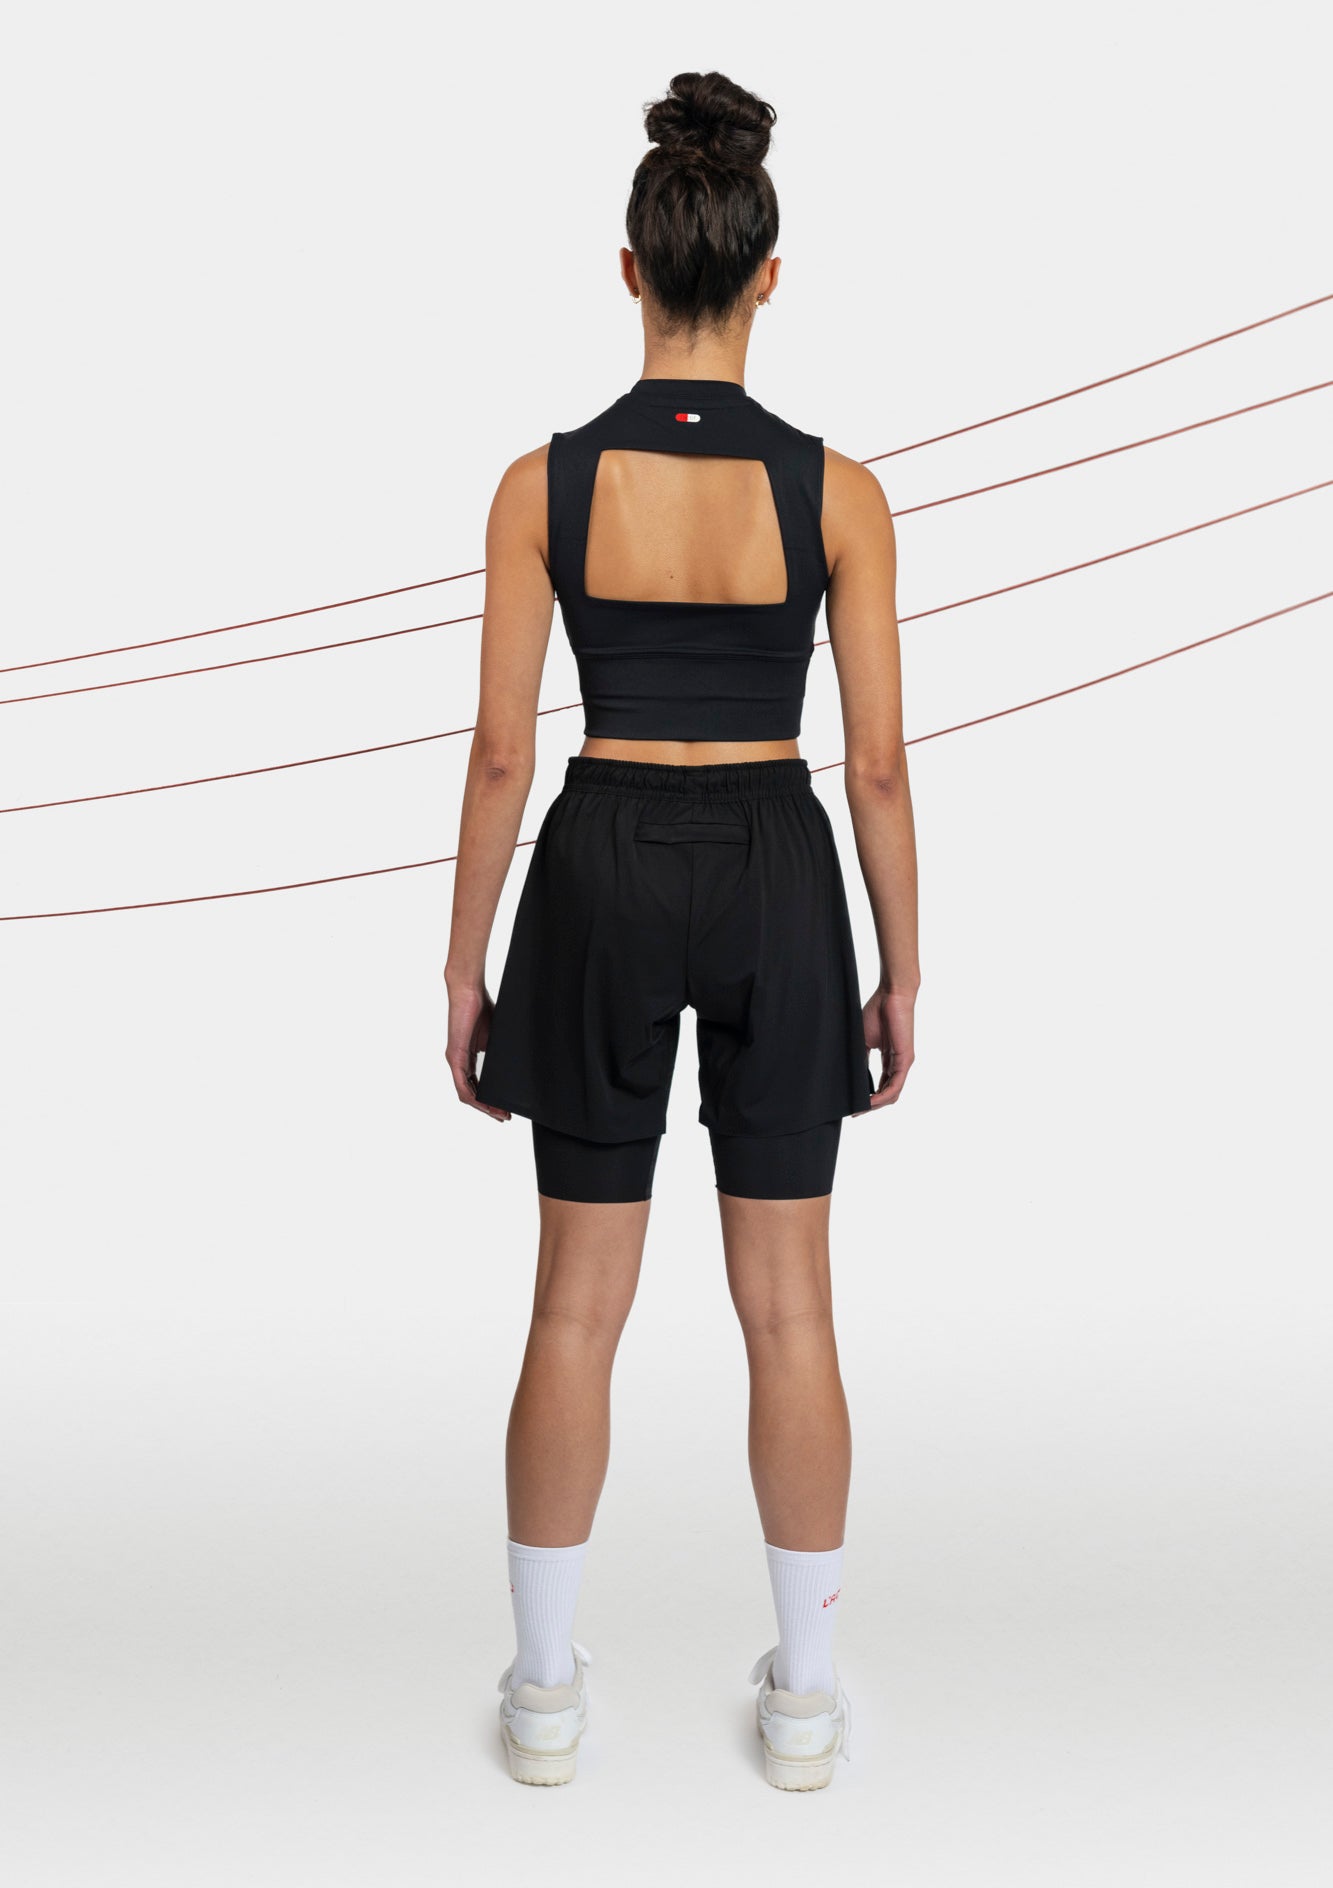 women's black workout shorts back